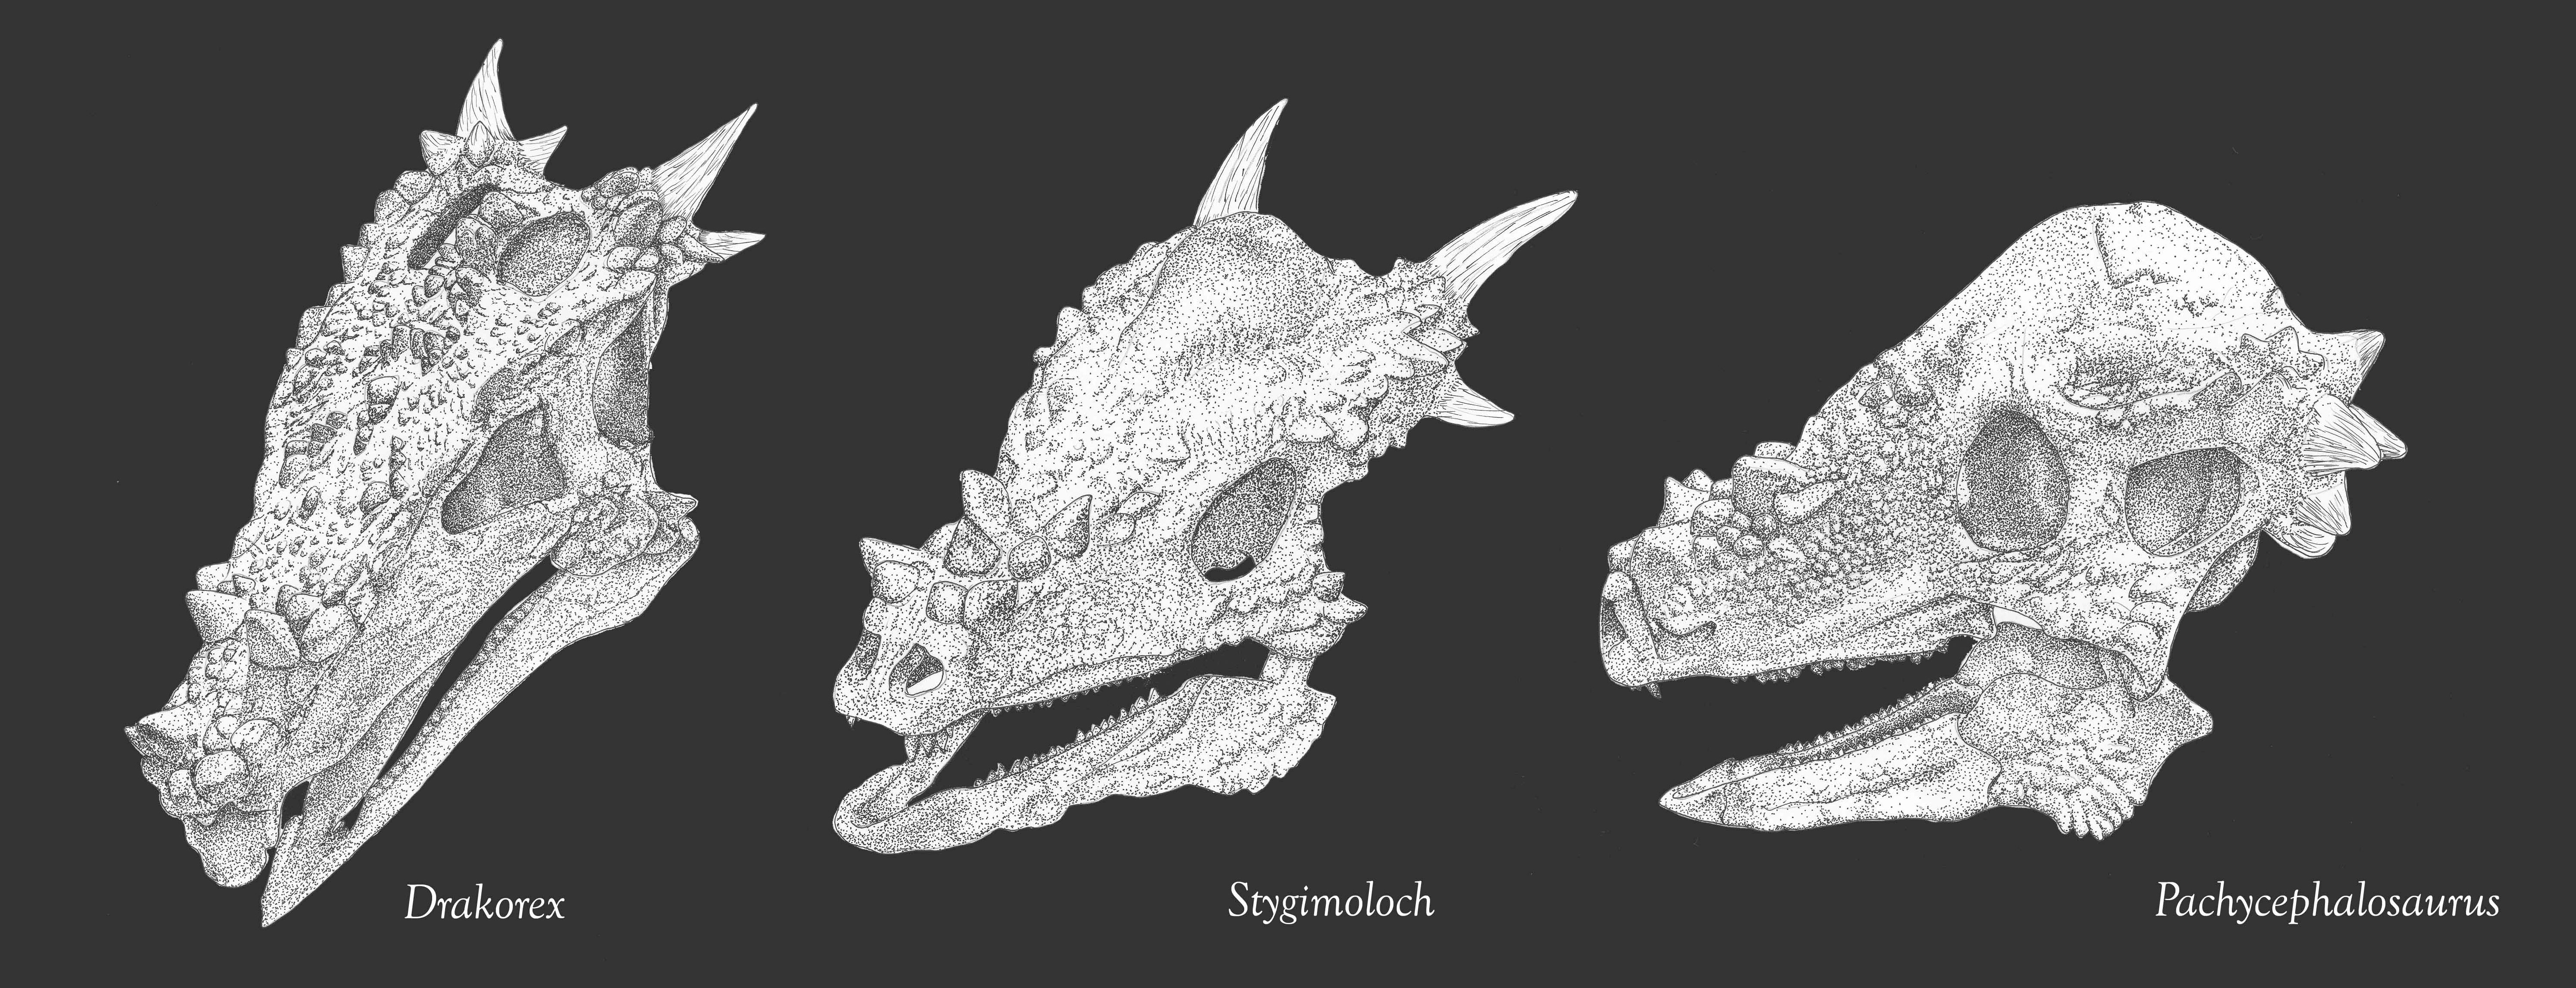 pachycephalosaurs.jpg